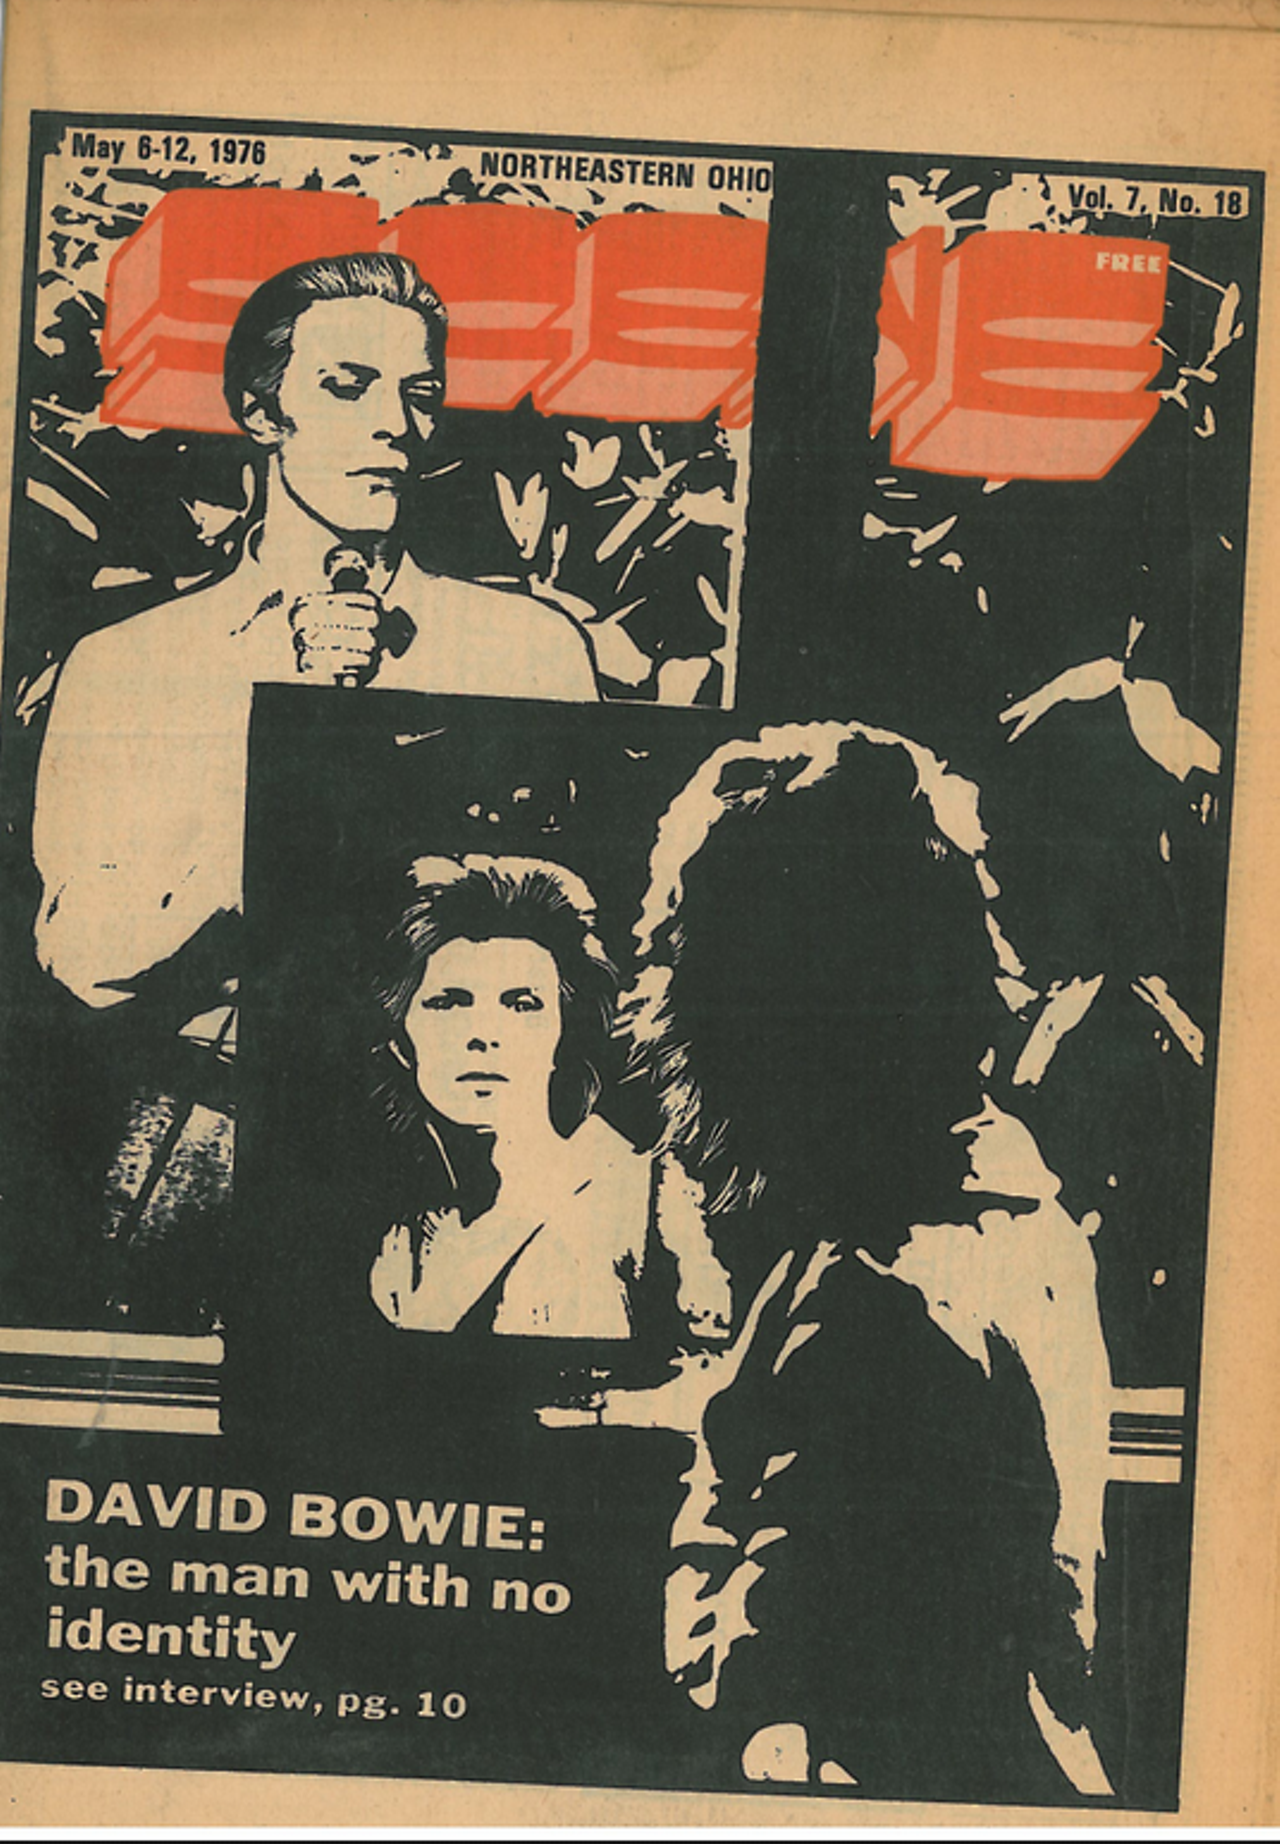 "David Bowe: the man with no identity," 1976.